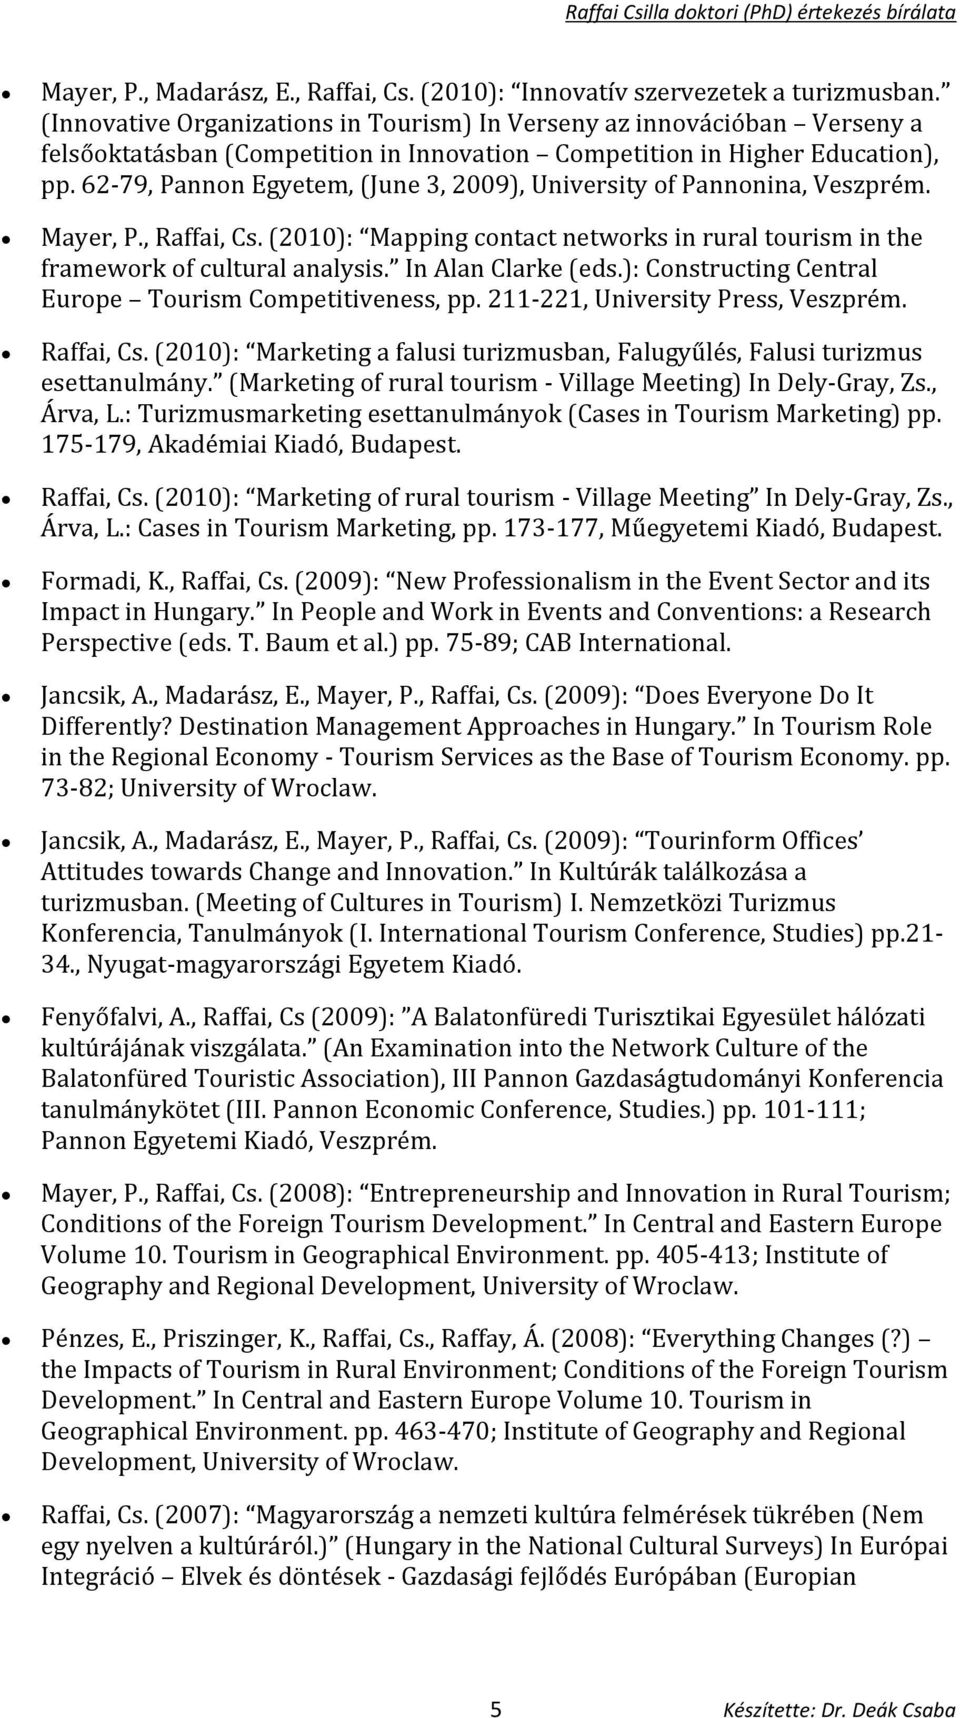 62-79, Pannon Egyetem, (June 3, 2009), University of Pannonina, Veszprém. Mayer, P., Raffai, Cs. (2010): Mapping contact networks in rural tourism in the framework of cultural analysis.